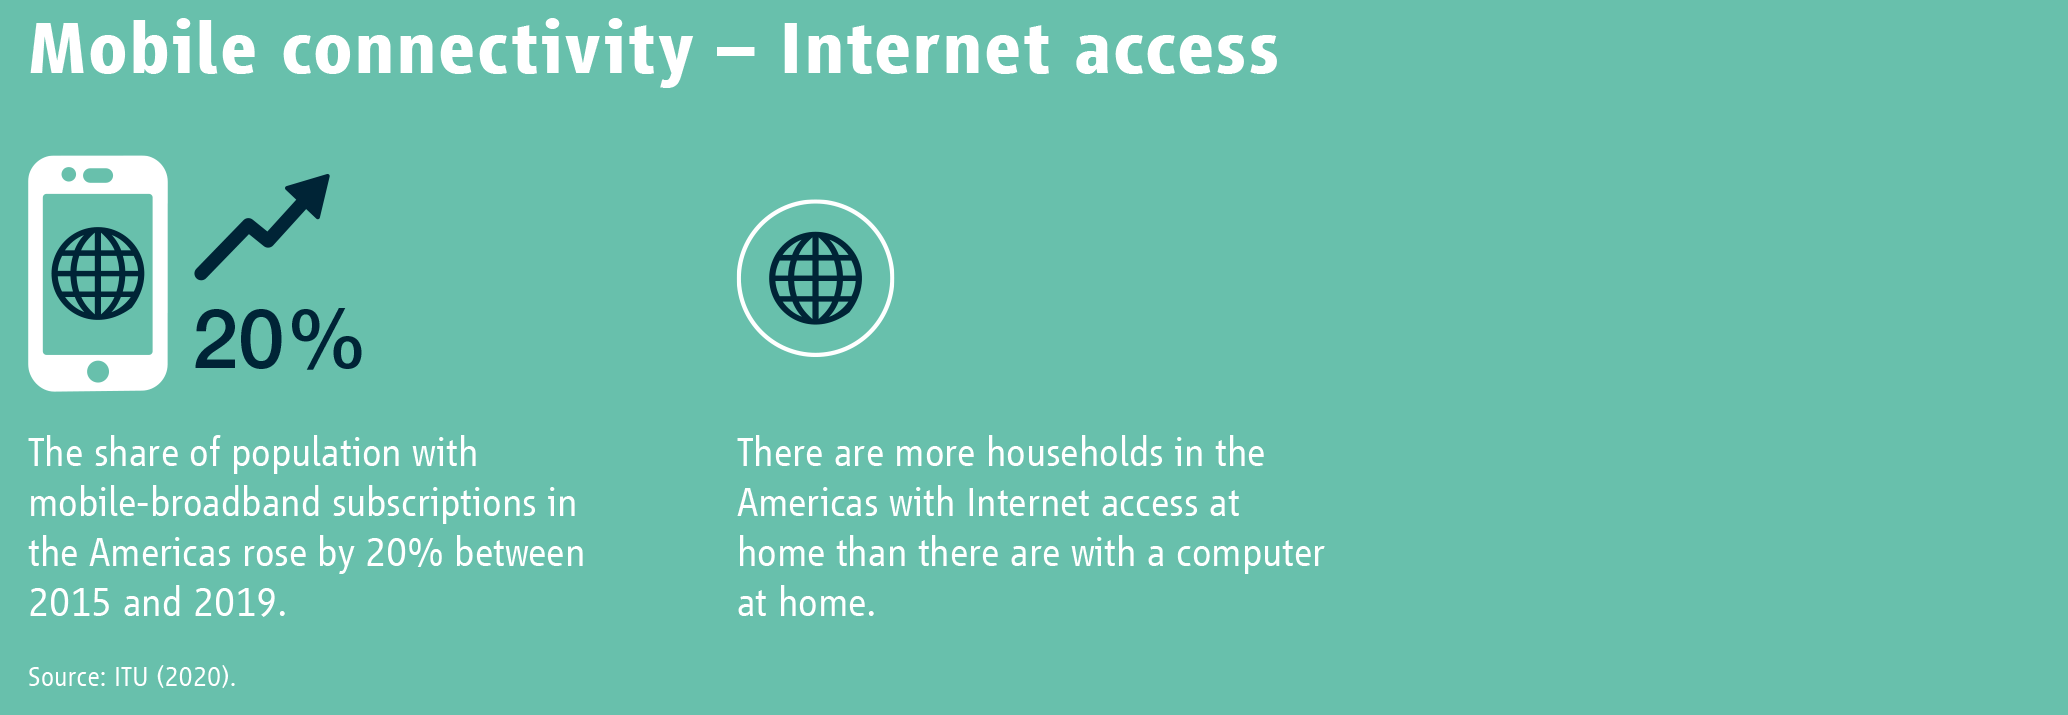 Mobile connectivity – Internet access